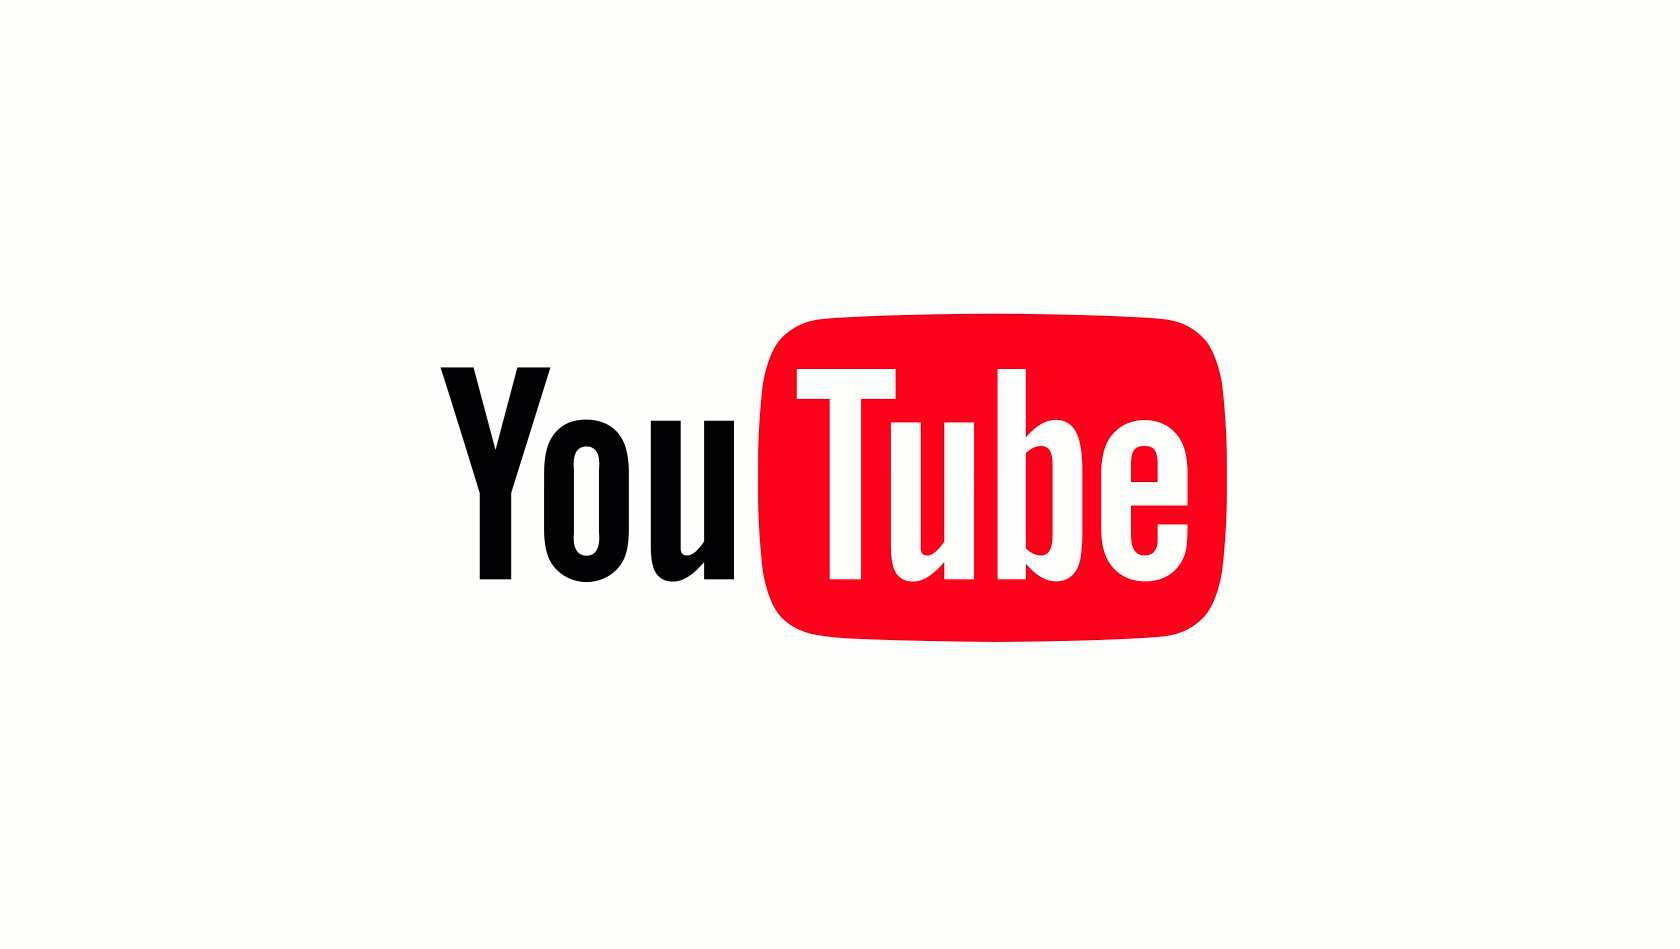 Doublage YouTube